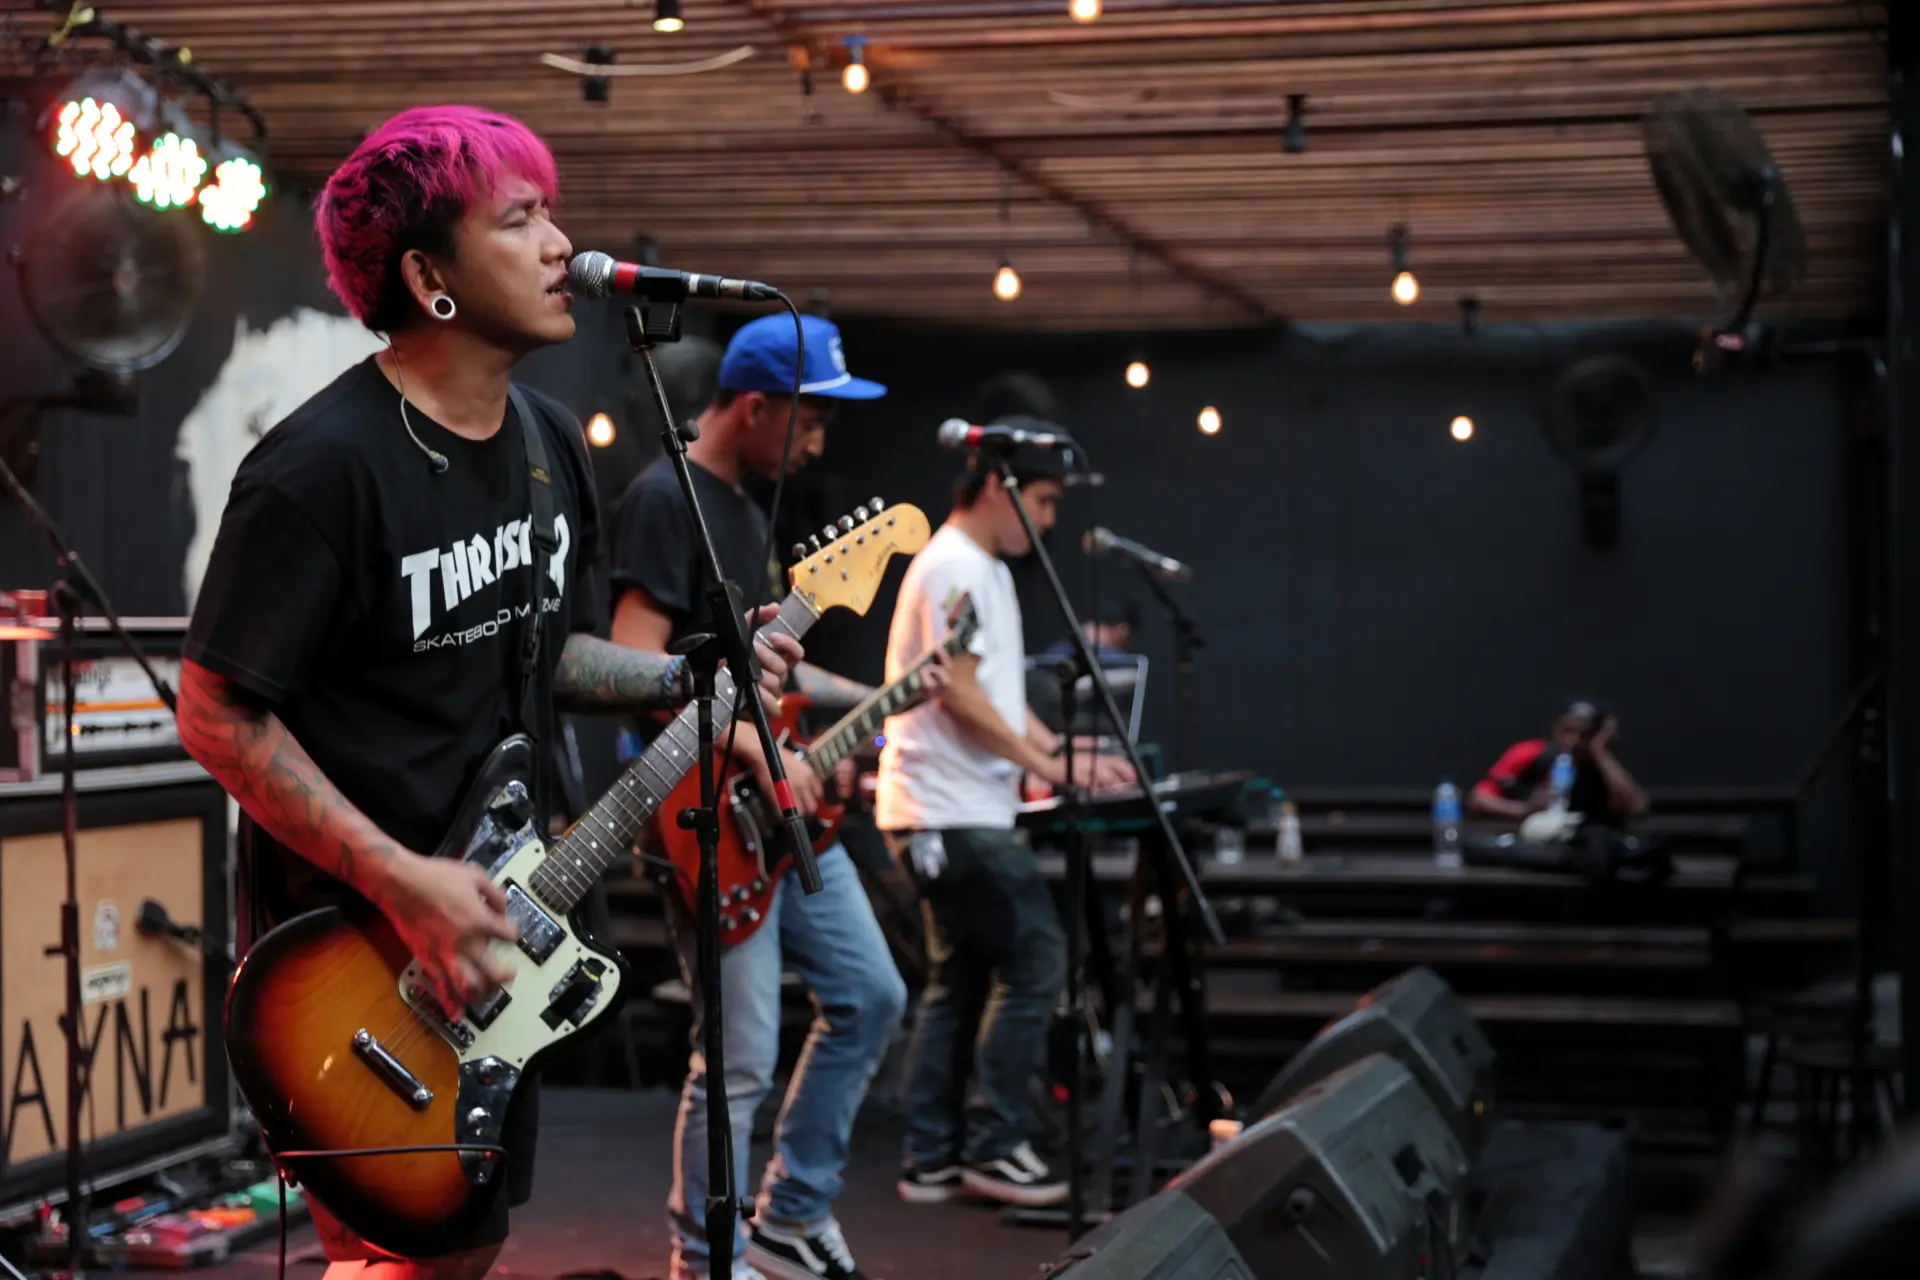 Foto Peluncuran Album Pee Wee Gaskins 'A Youth Not Wasted' (Adrian Putra/bintang.com)